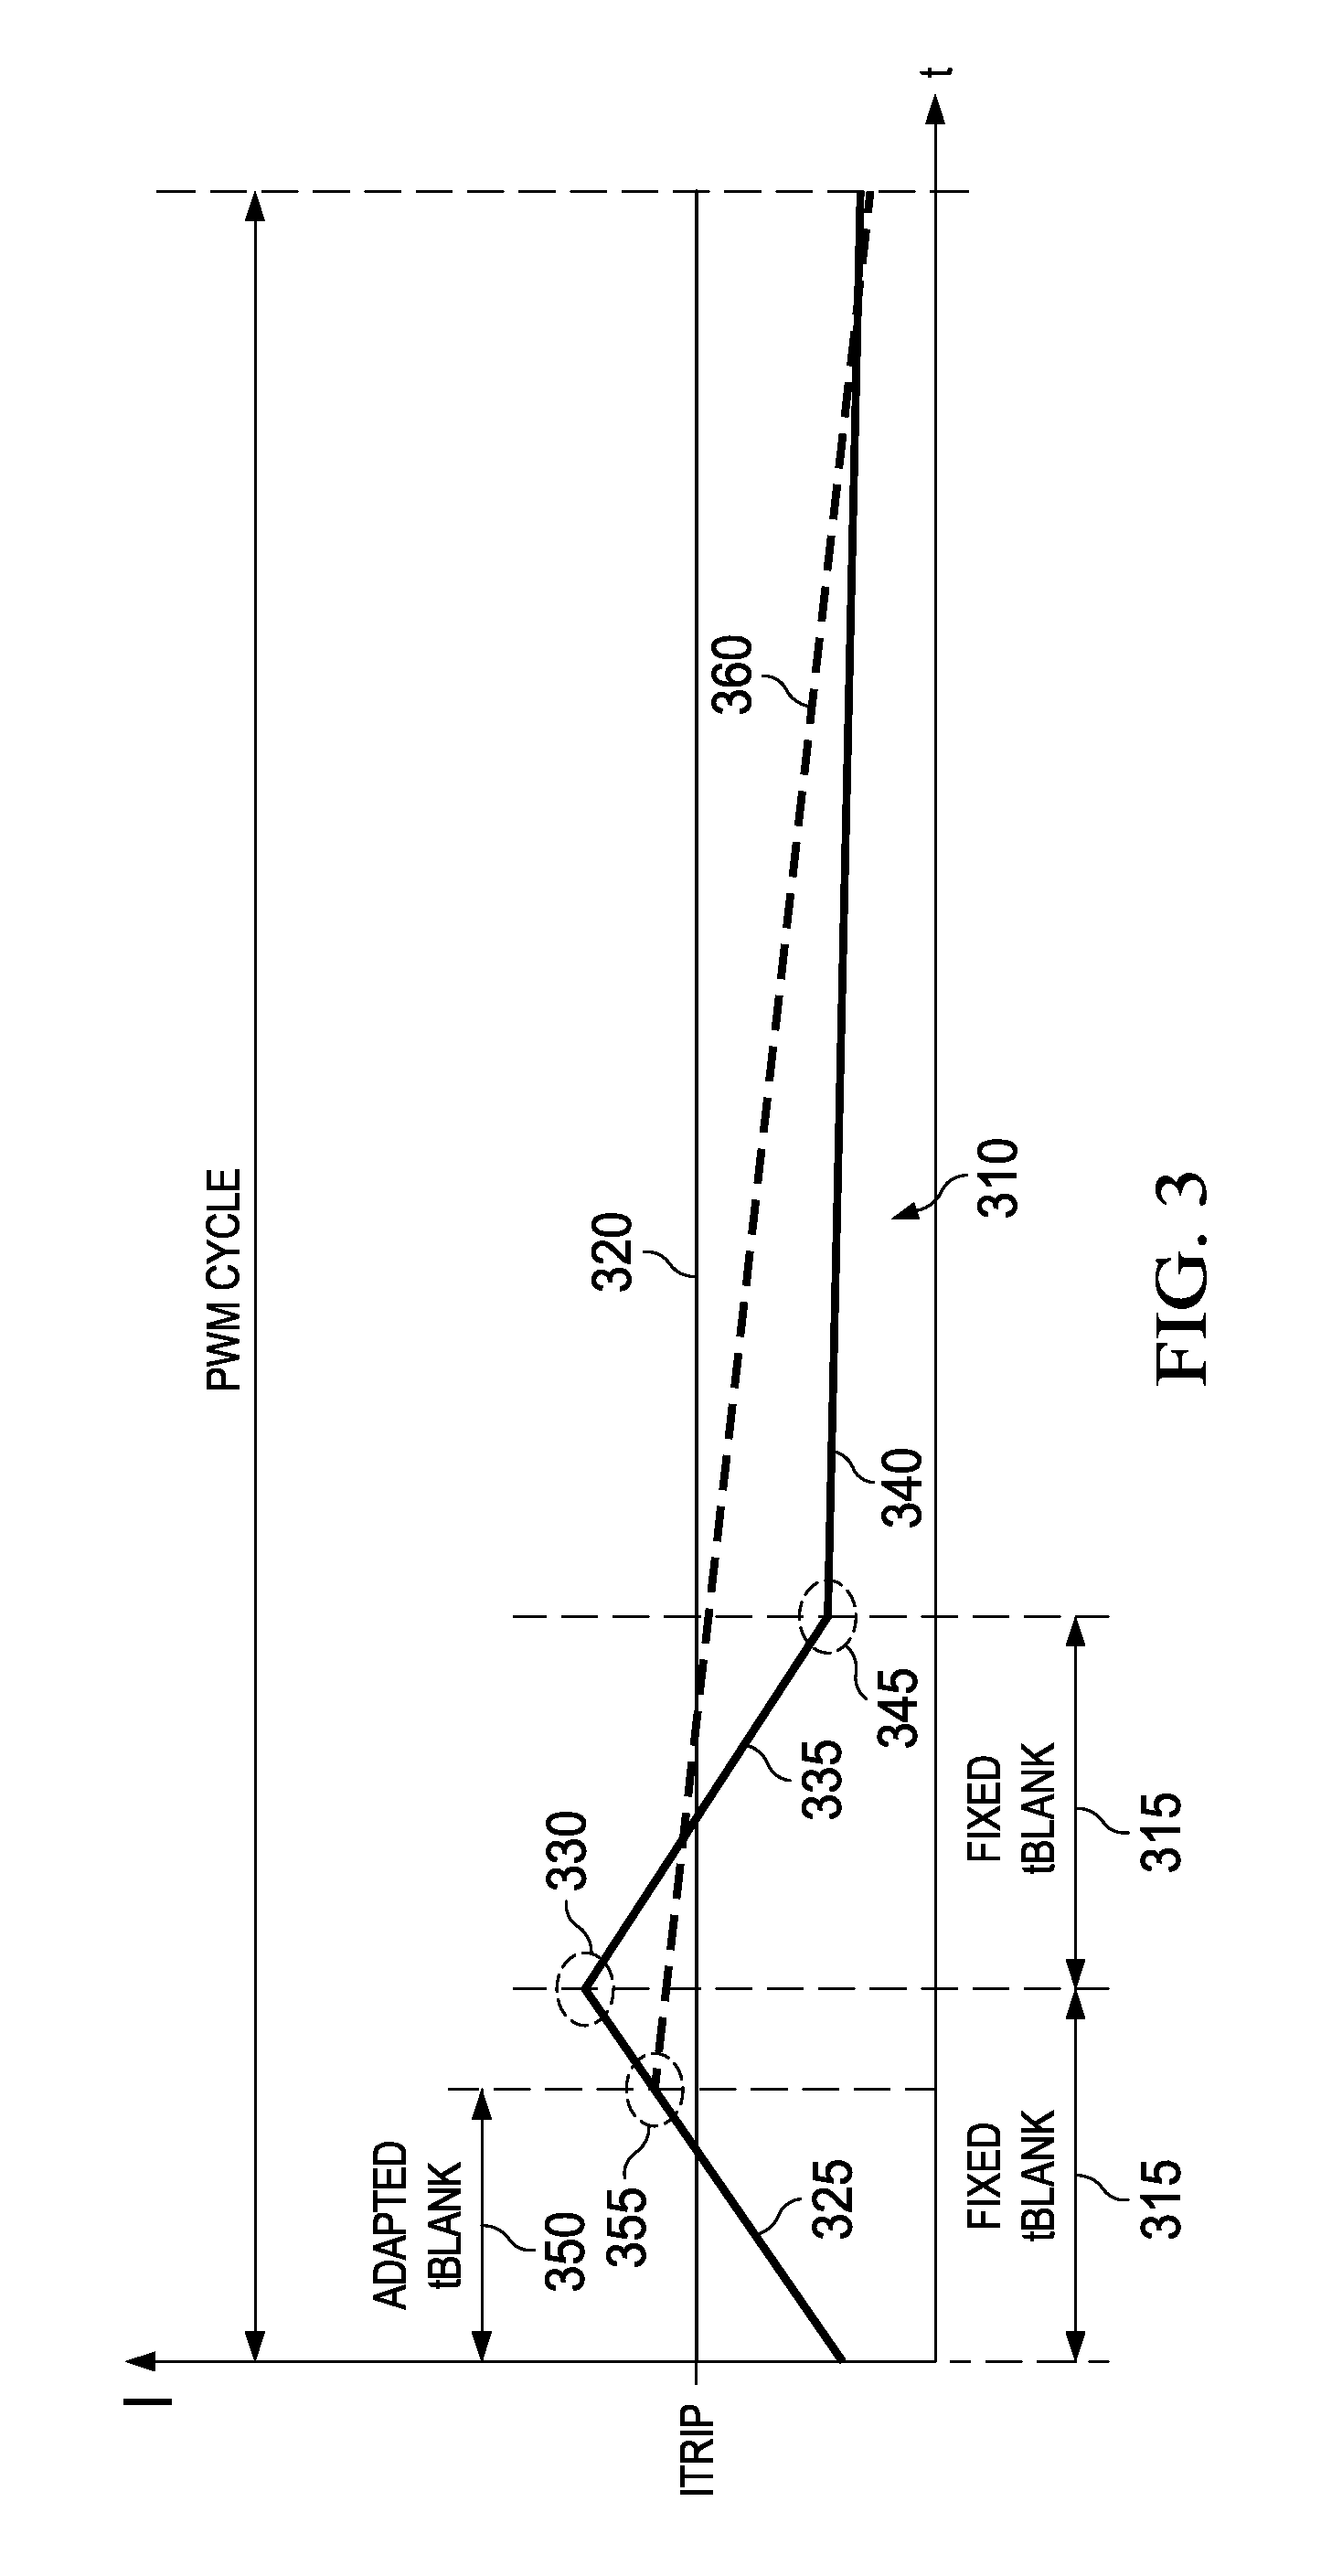 Sensed motor winding current adapting blanking period between max/min values